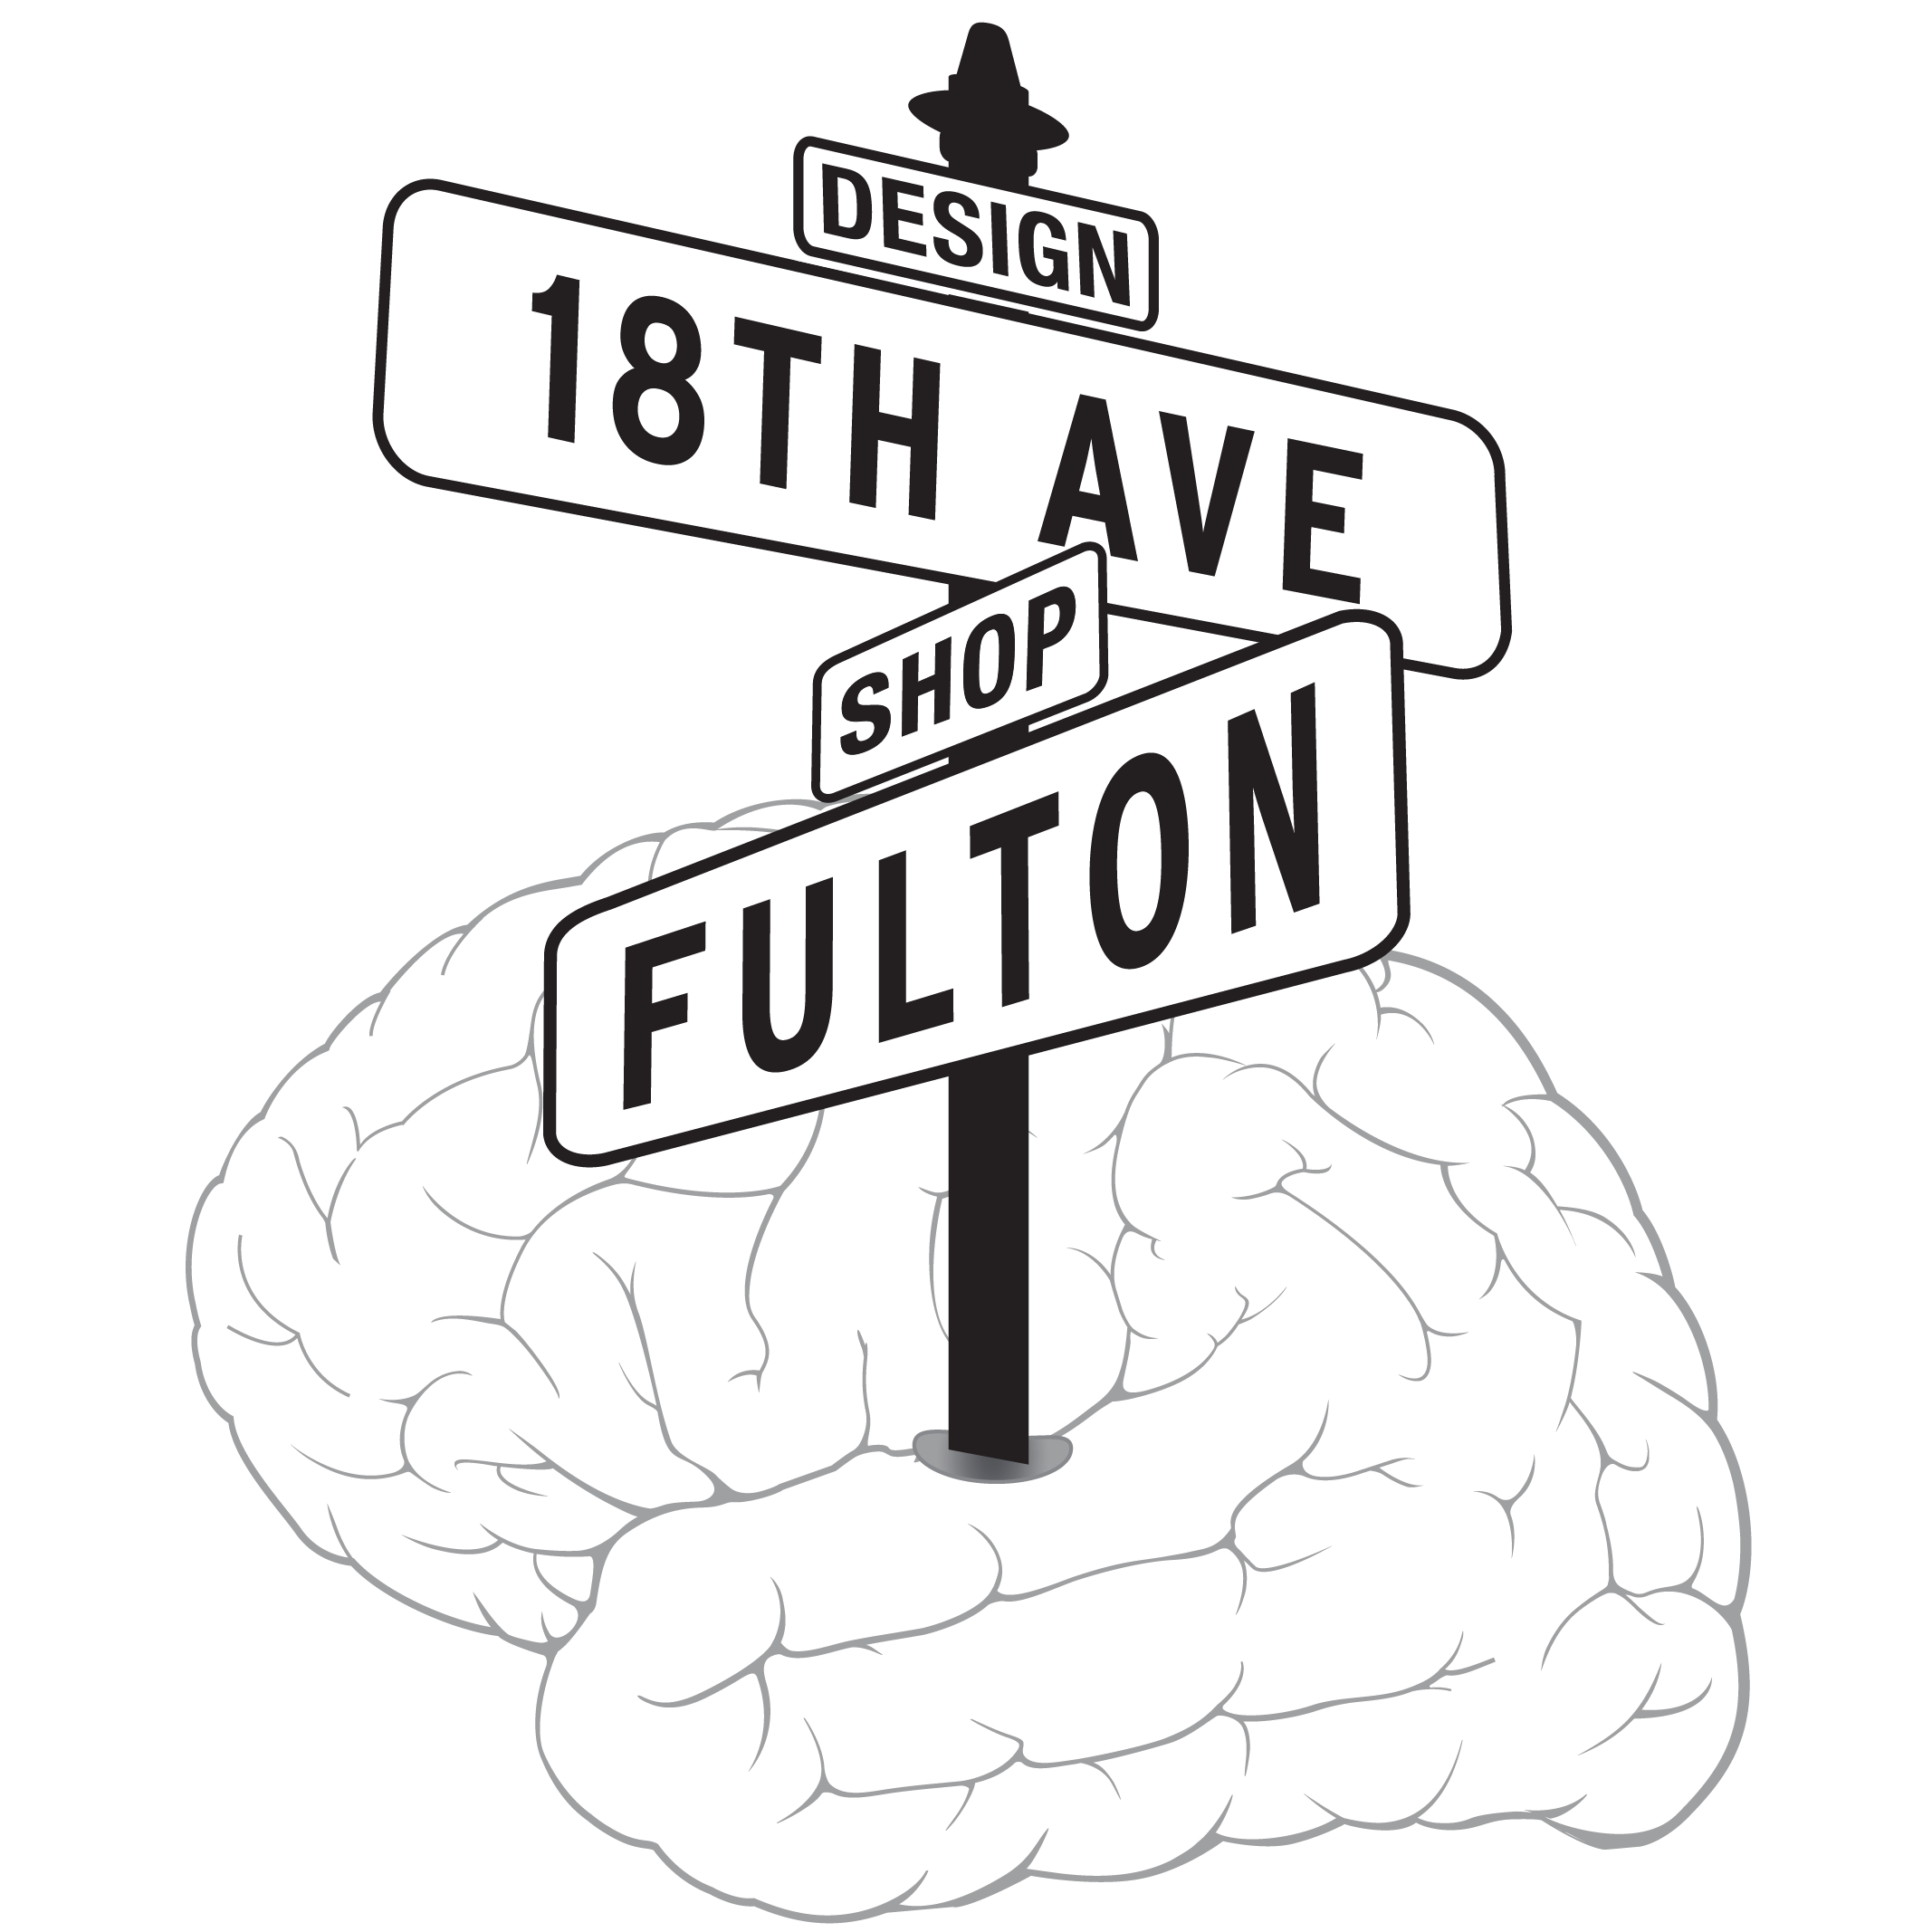 18thxFulton Design Shop – 37.772959, -122.476776